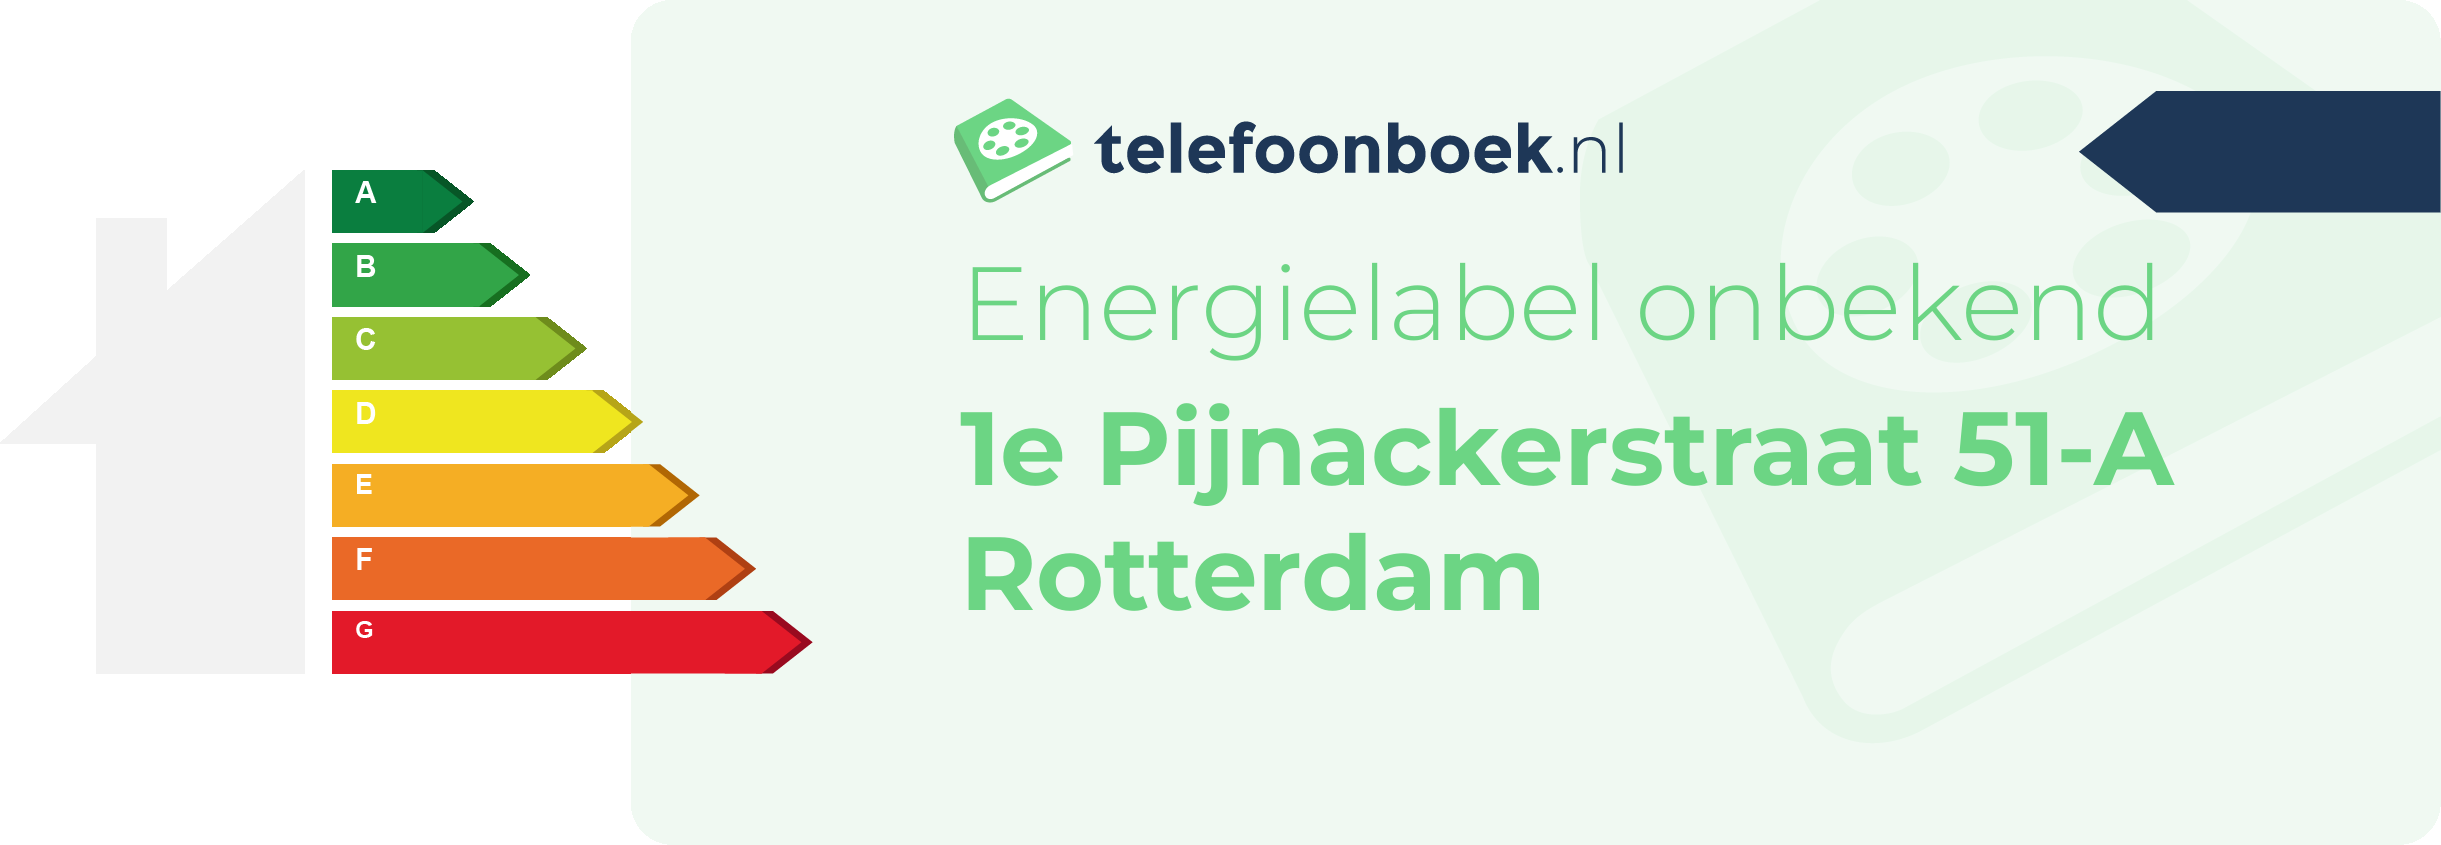 Energielabel 1e Pijnackerstraat 51-A Rotterdam